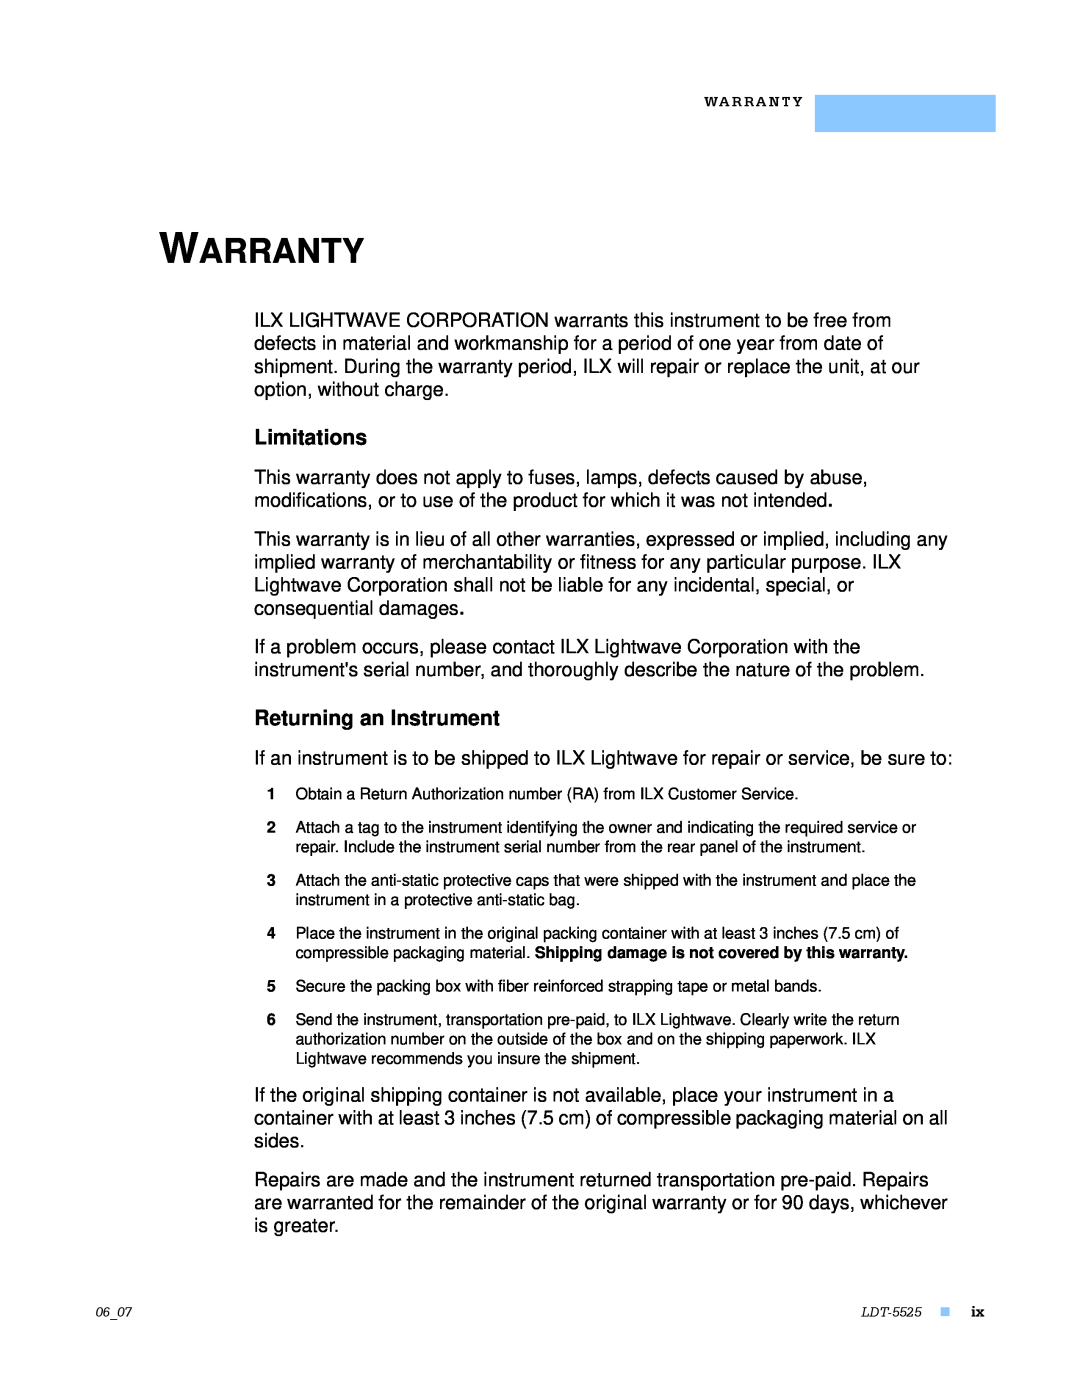 Lightwave Communications LDT-5525 manual Warranty, Limitations, Returning an Instrument 